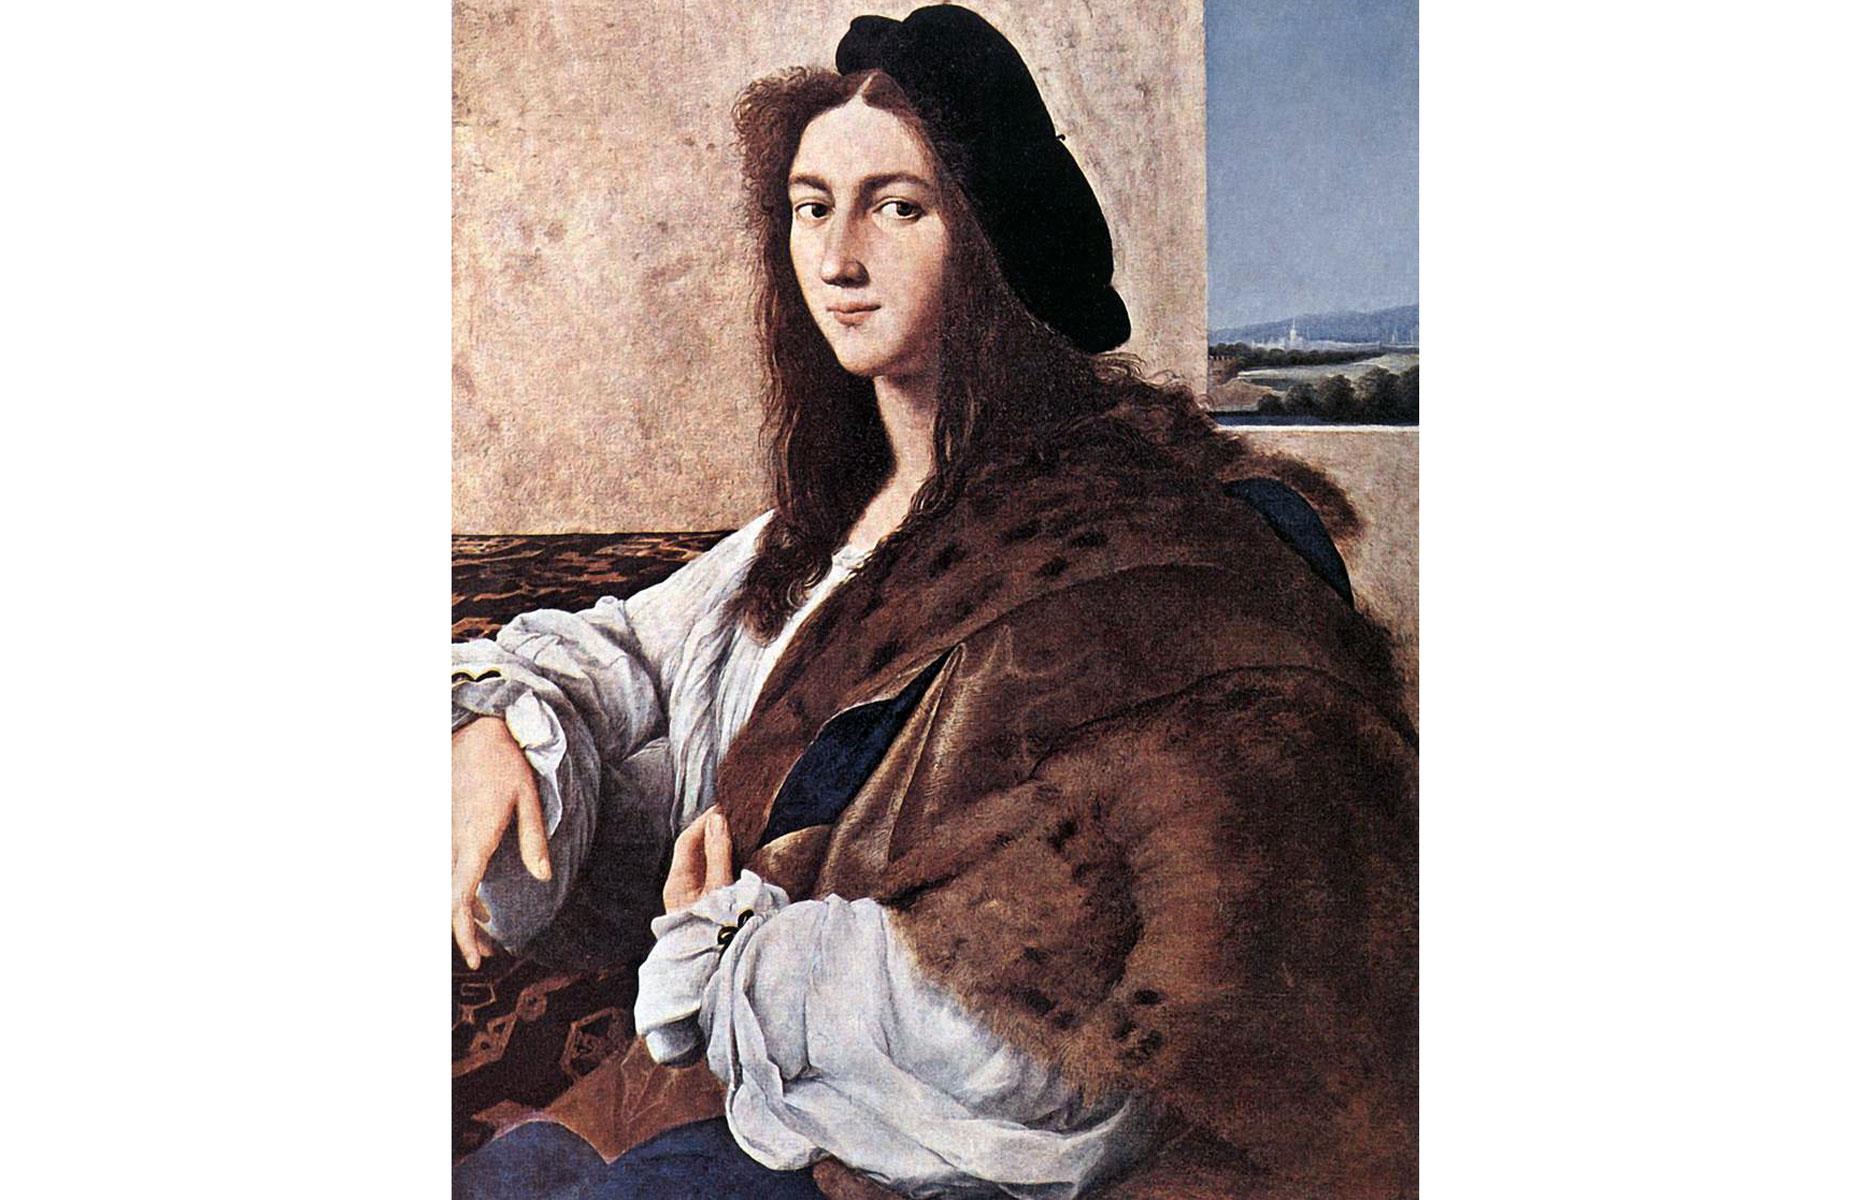 Raphael's Portrait of a Young Man, value: $100 million (£77.5m) – priceless